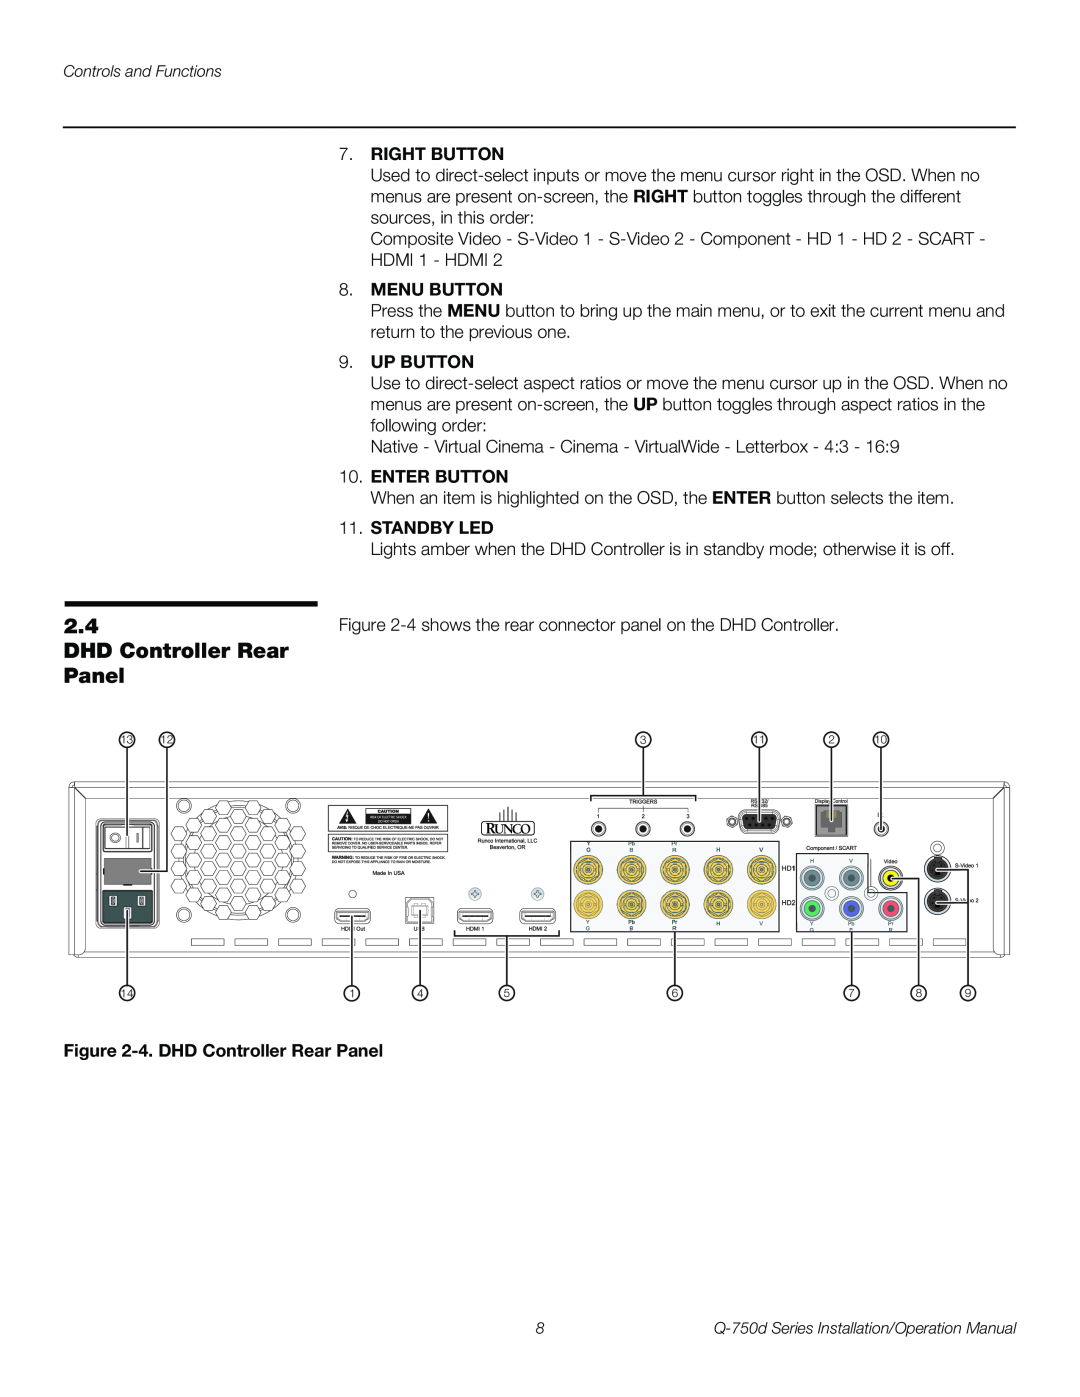 Runco Q-750D operation manual DHD Controller Rear Panel, Right Button, Menu Button, Up Button, Enter Button, Standby Led 